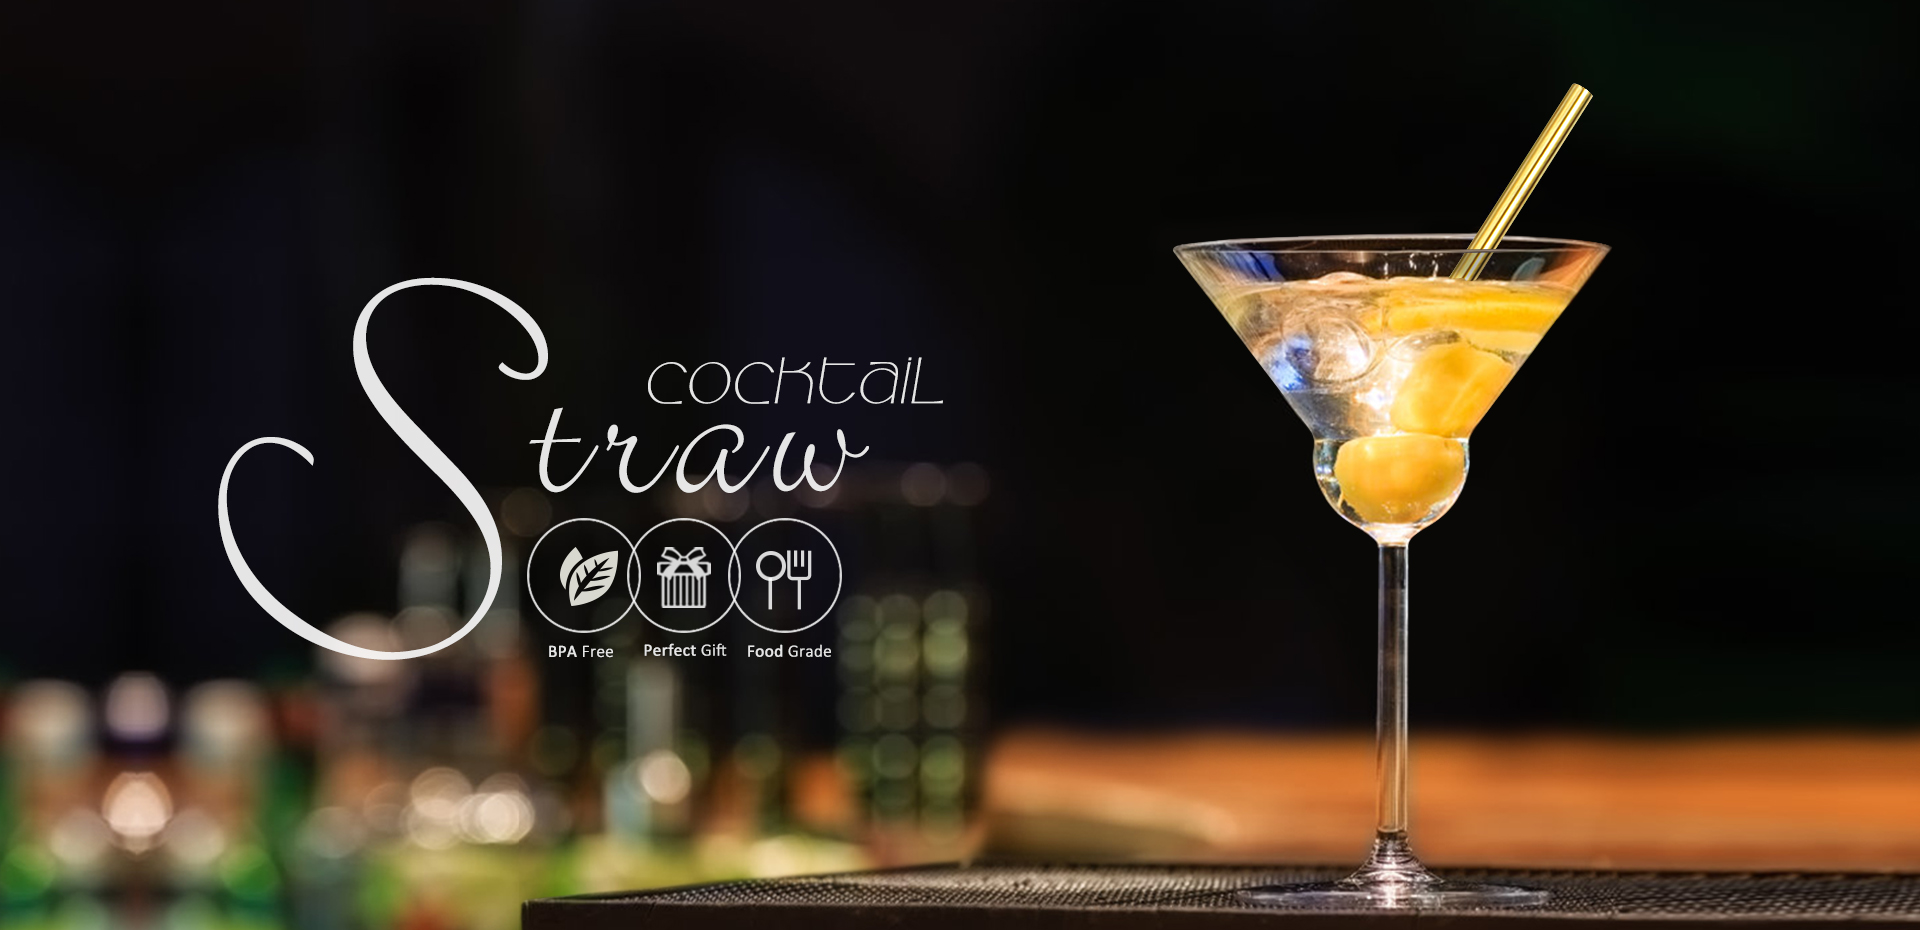 Cocktail straw